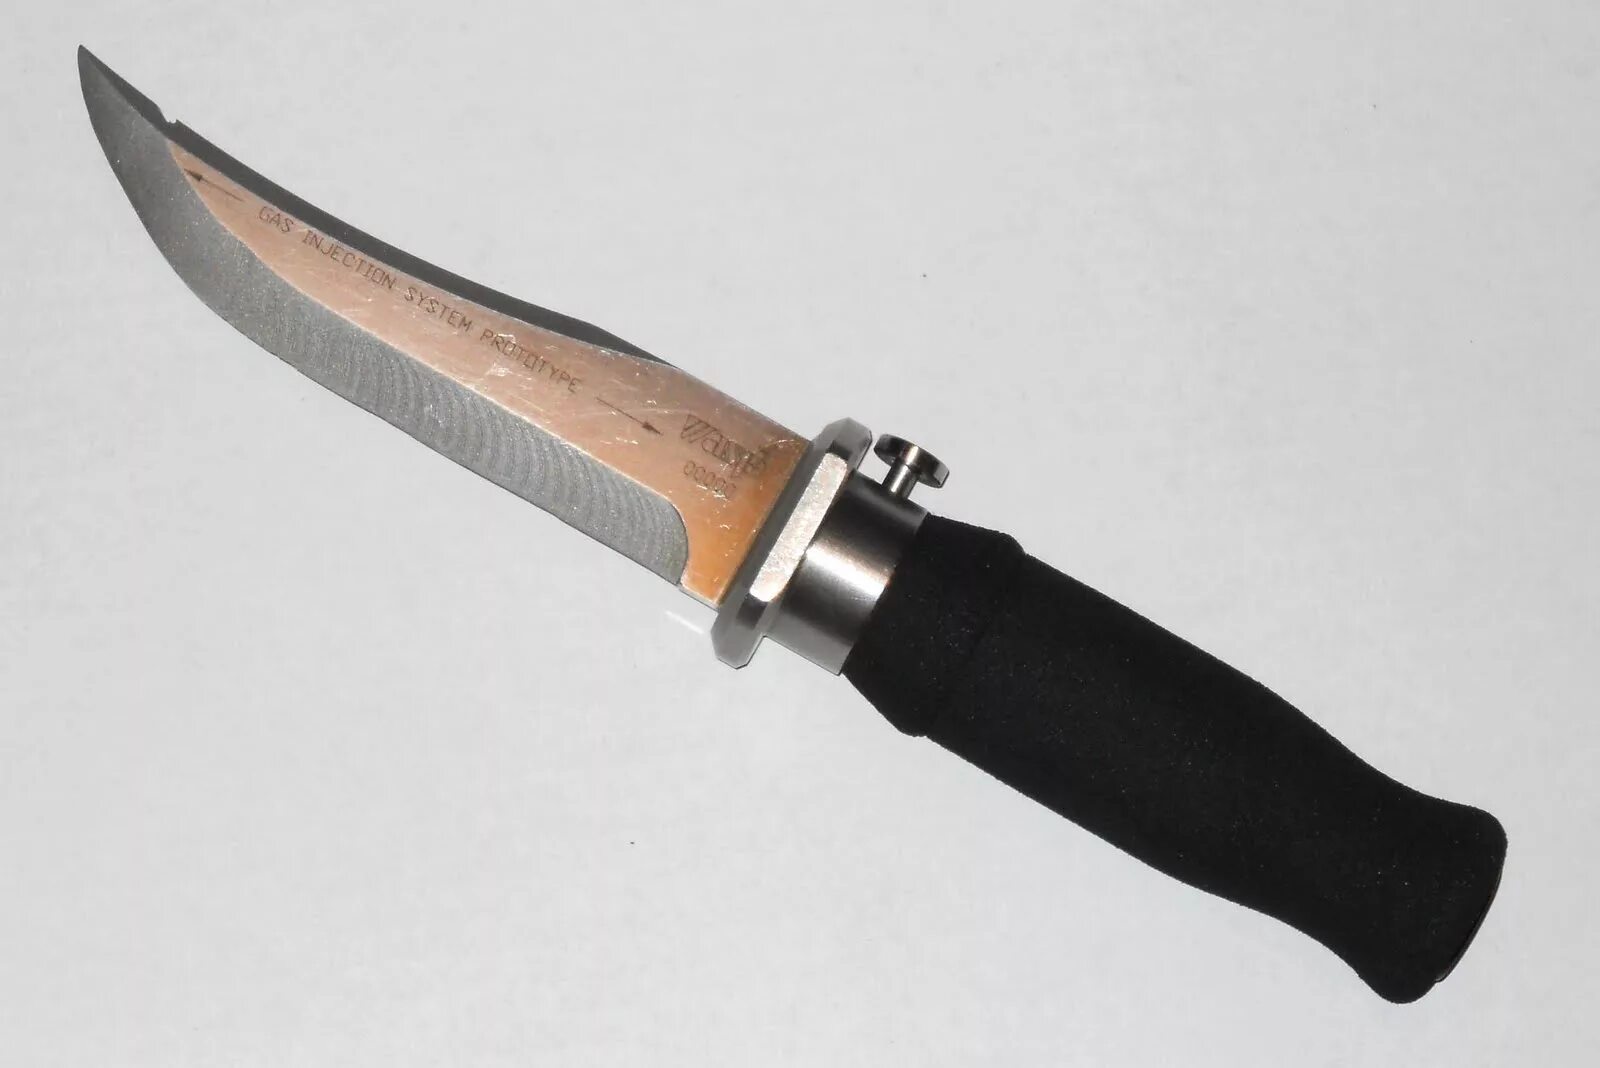 Д2 нож купить. Wasp Knife нож. Wasp injector Knife. Самый опасный нож в мире Wasp injector Knife. Нож Wasp Injection Systems.